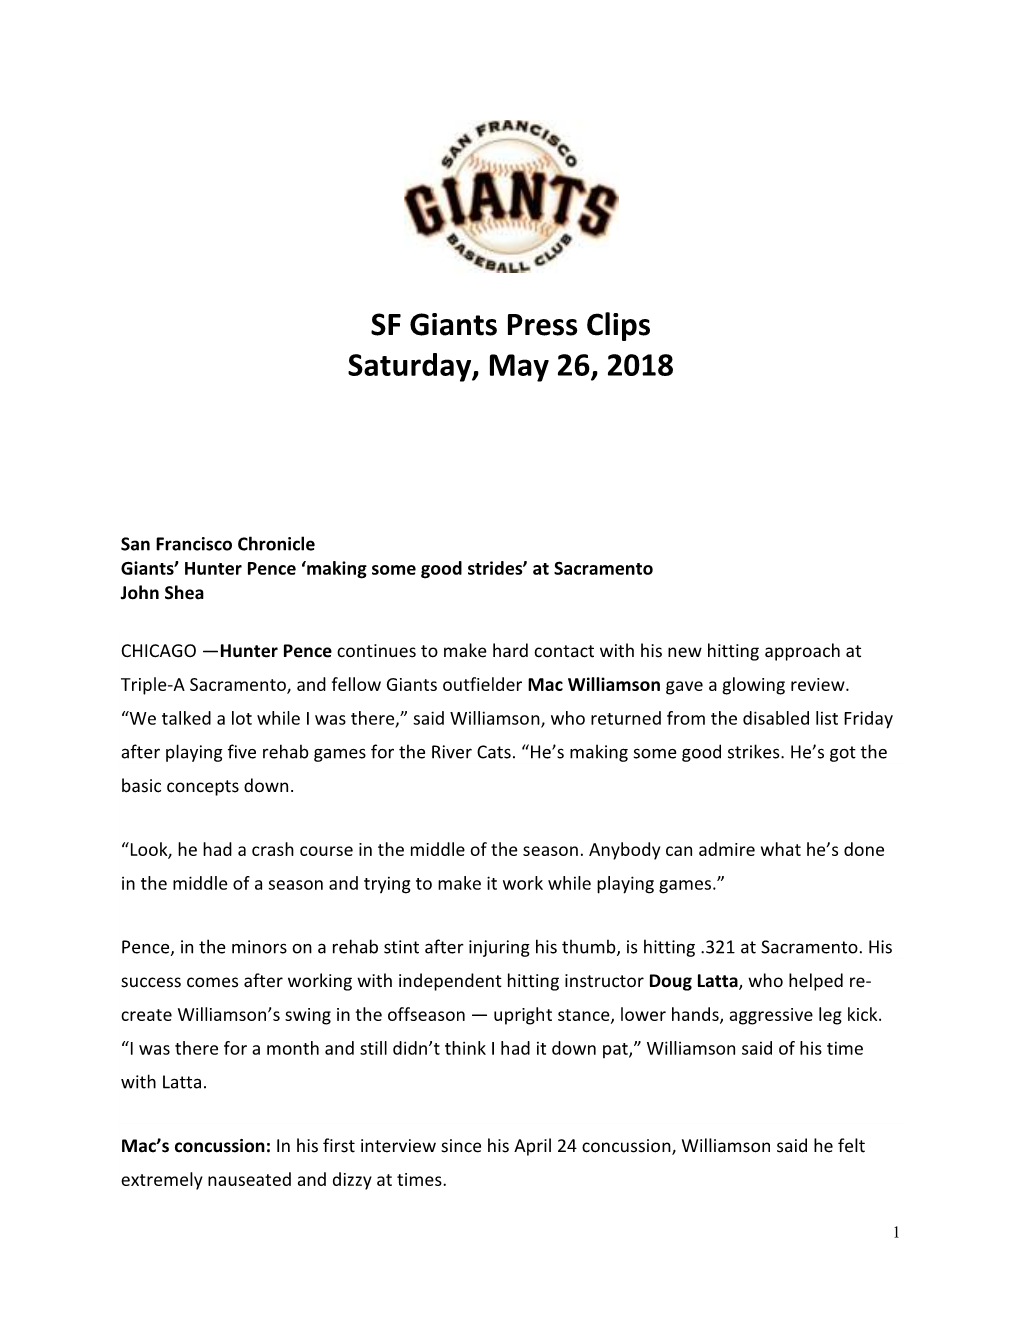 SF Giants Press Clips Saturday, May 26, 2018